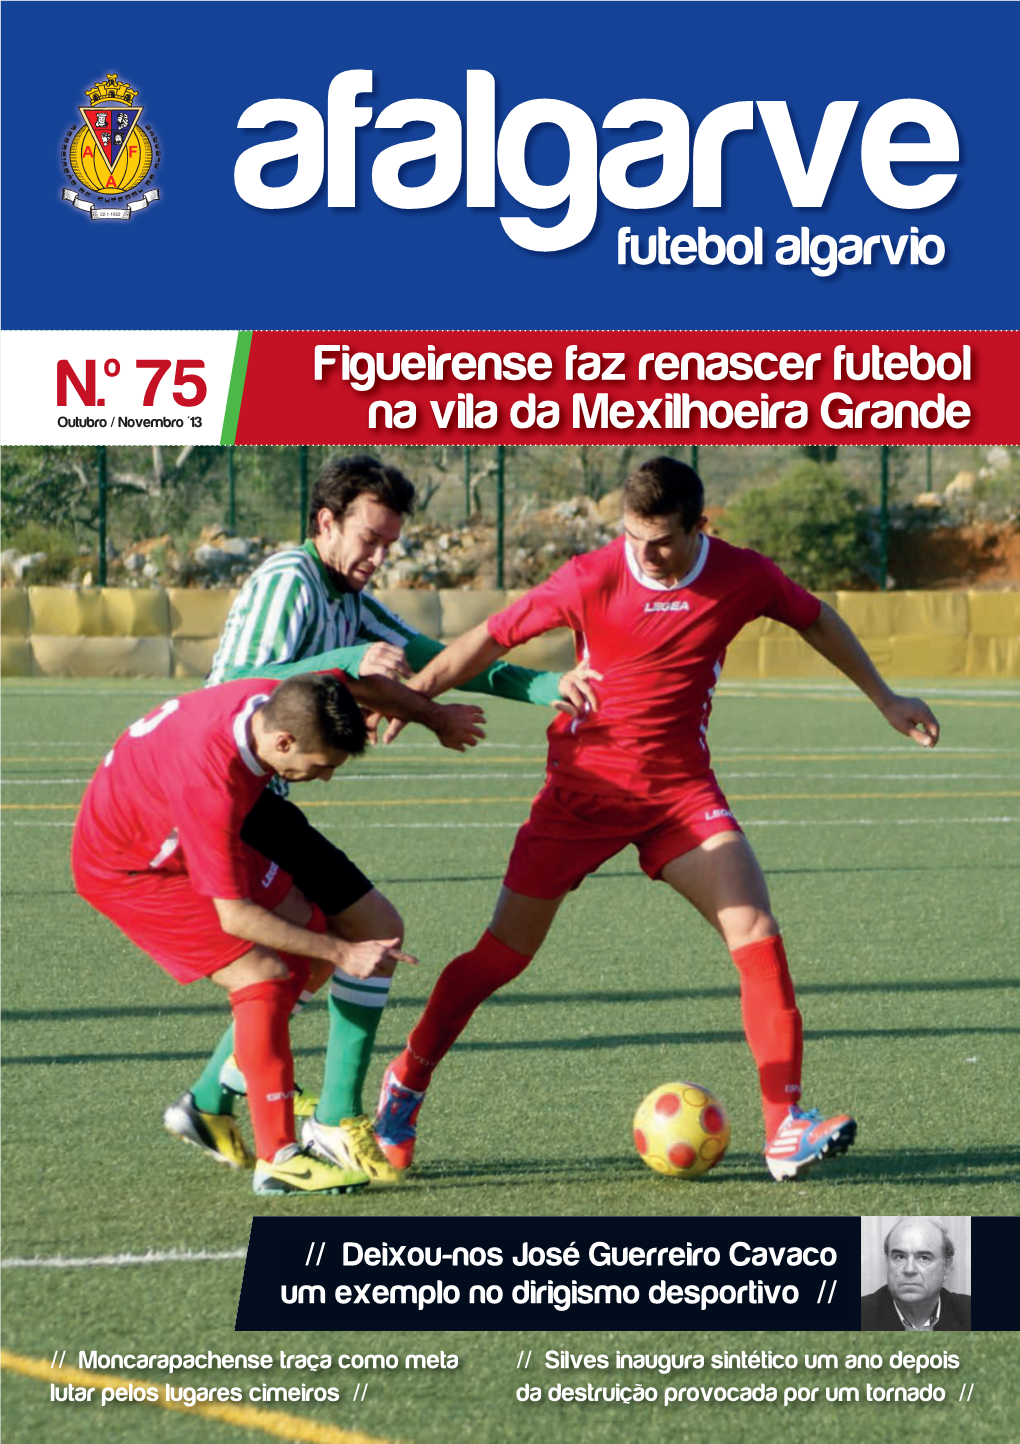 N.º 75 Figueirense Faz Renascer Futebol Outubro / Novembro '13 Na Vila Da Mexilhoeira Grande